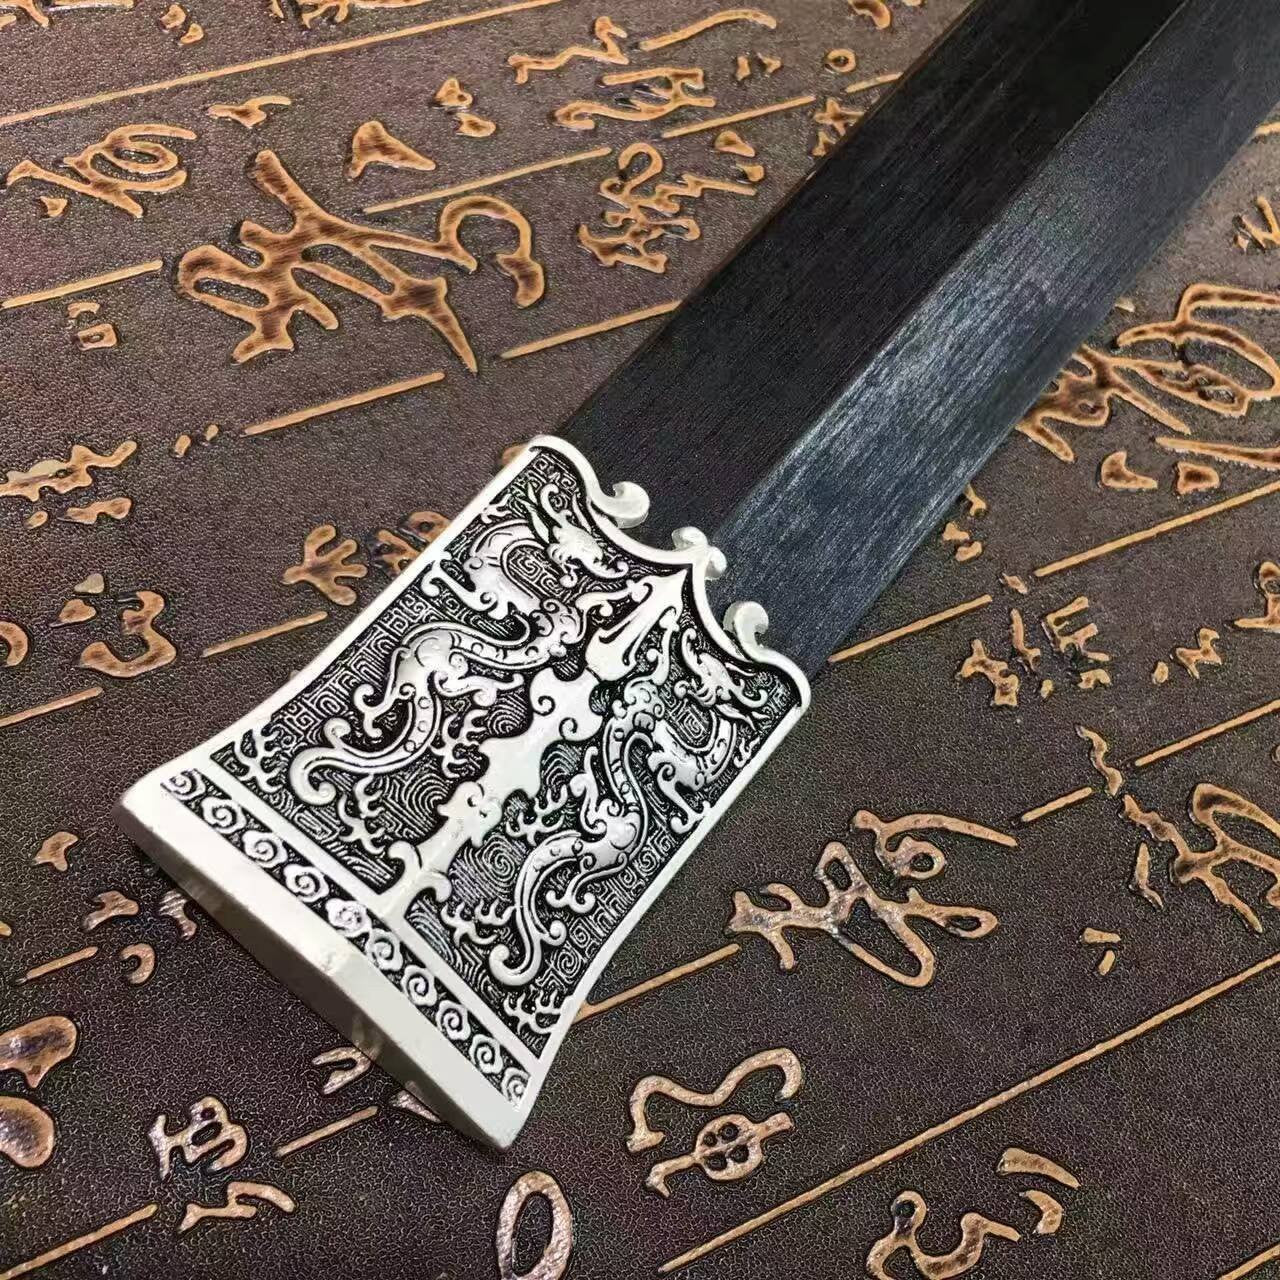 Han Jian/High carbon steel eight surface blade/Black scabbard/Length 39" - Chinese sword shop